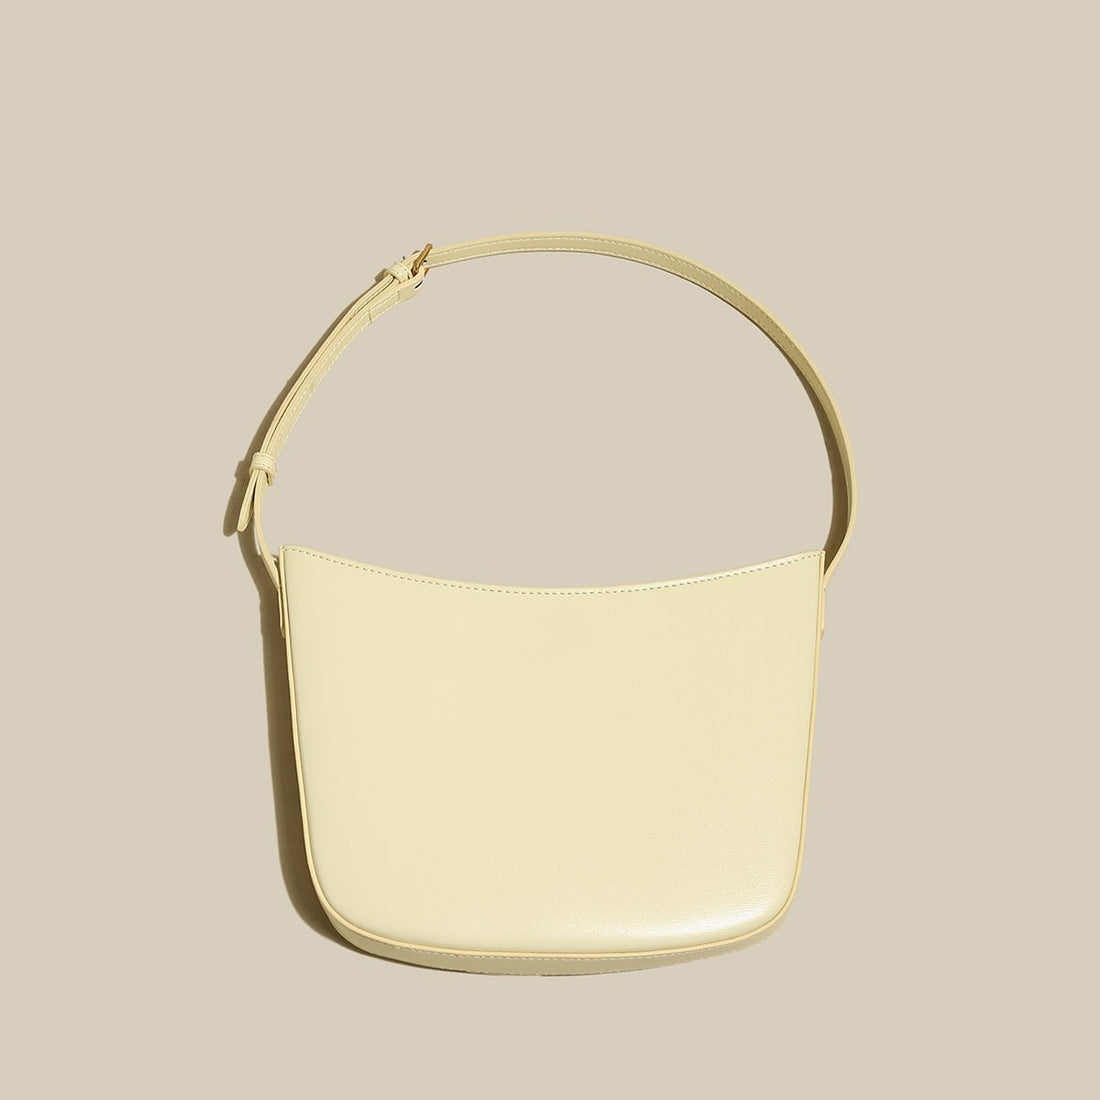 Mille Scarf Yellow Shoulder Bag - 0cm